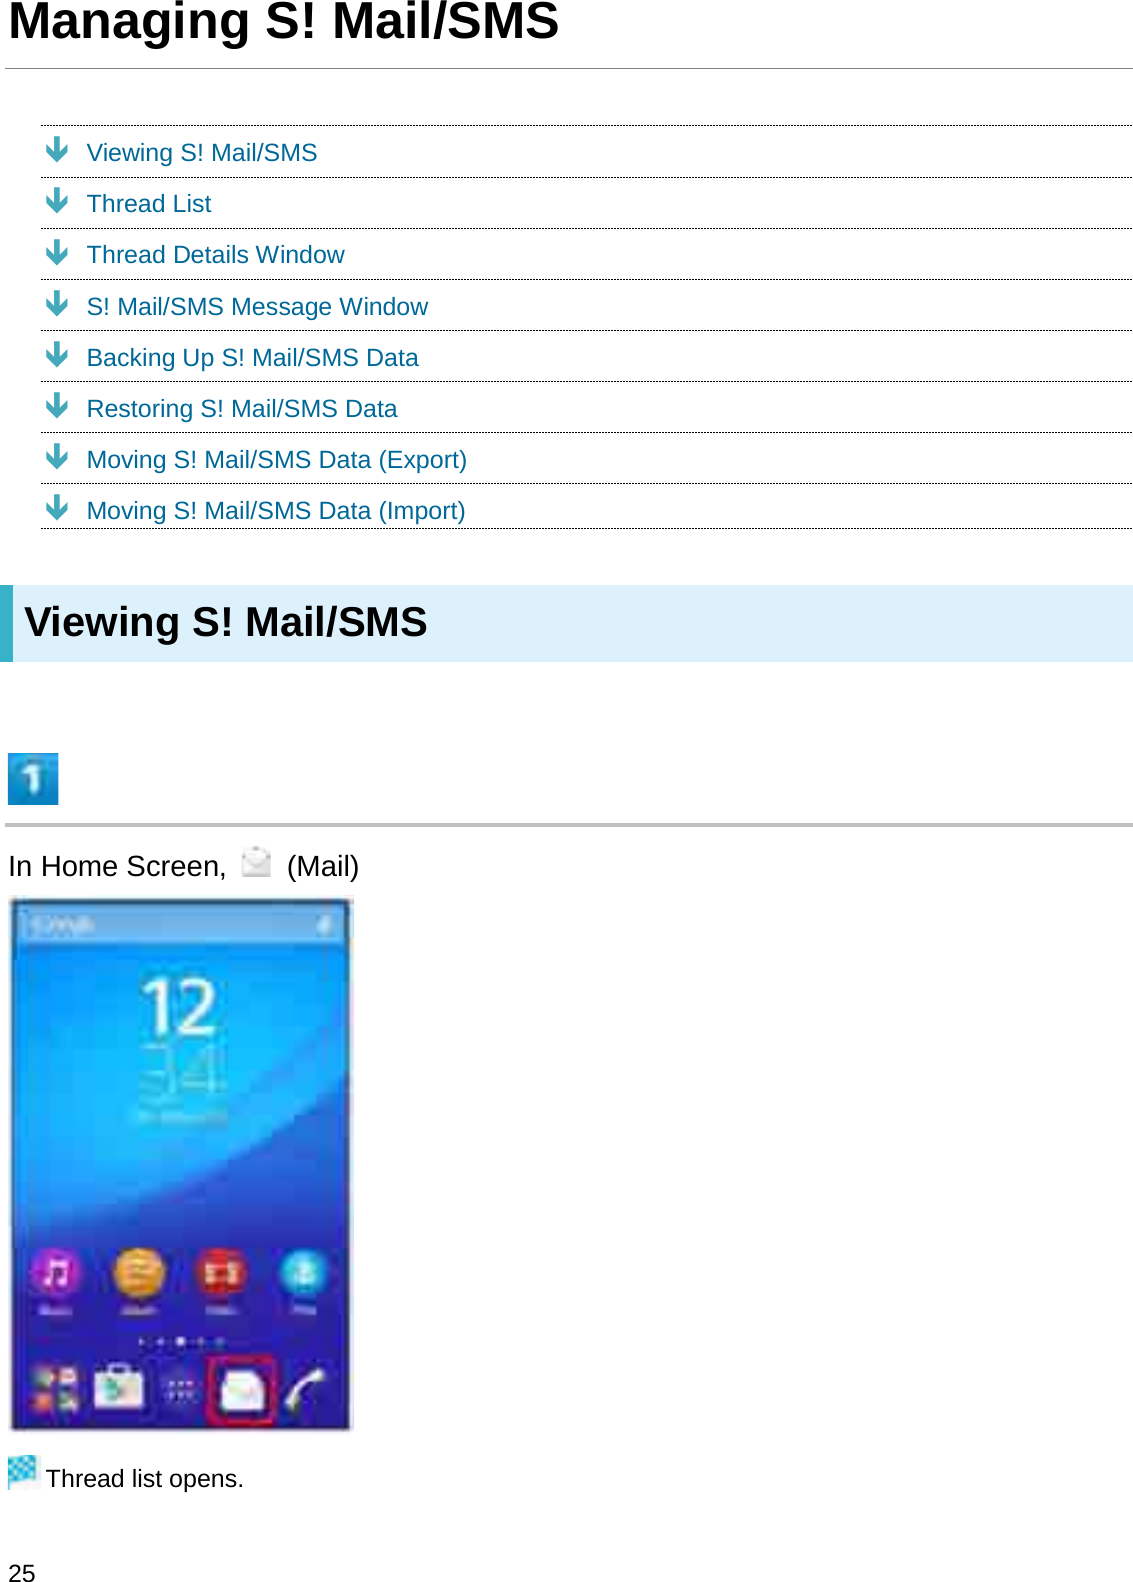 Managing S! Mail/SMSÐViewing S! Mail/SMSÐThread ListÐThread Details WindowÐS! Mail/SMS Message WindowÐBacking Up S! Mail/SMS DataÐRestoring S! Mail/SMS DataÐMoving S! Mail/SMS Data (Export)ÐMoving S! Mail/SMS Data (Import)Viewing S! Mail/SMSIn Home Screen,  (Mail)Thread list opens.25